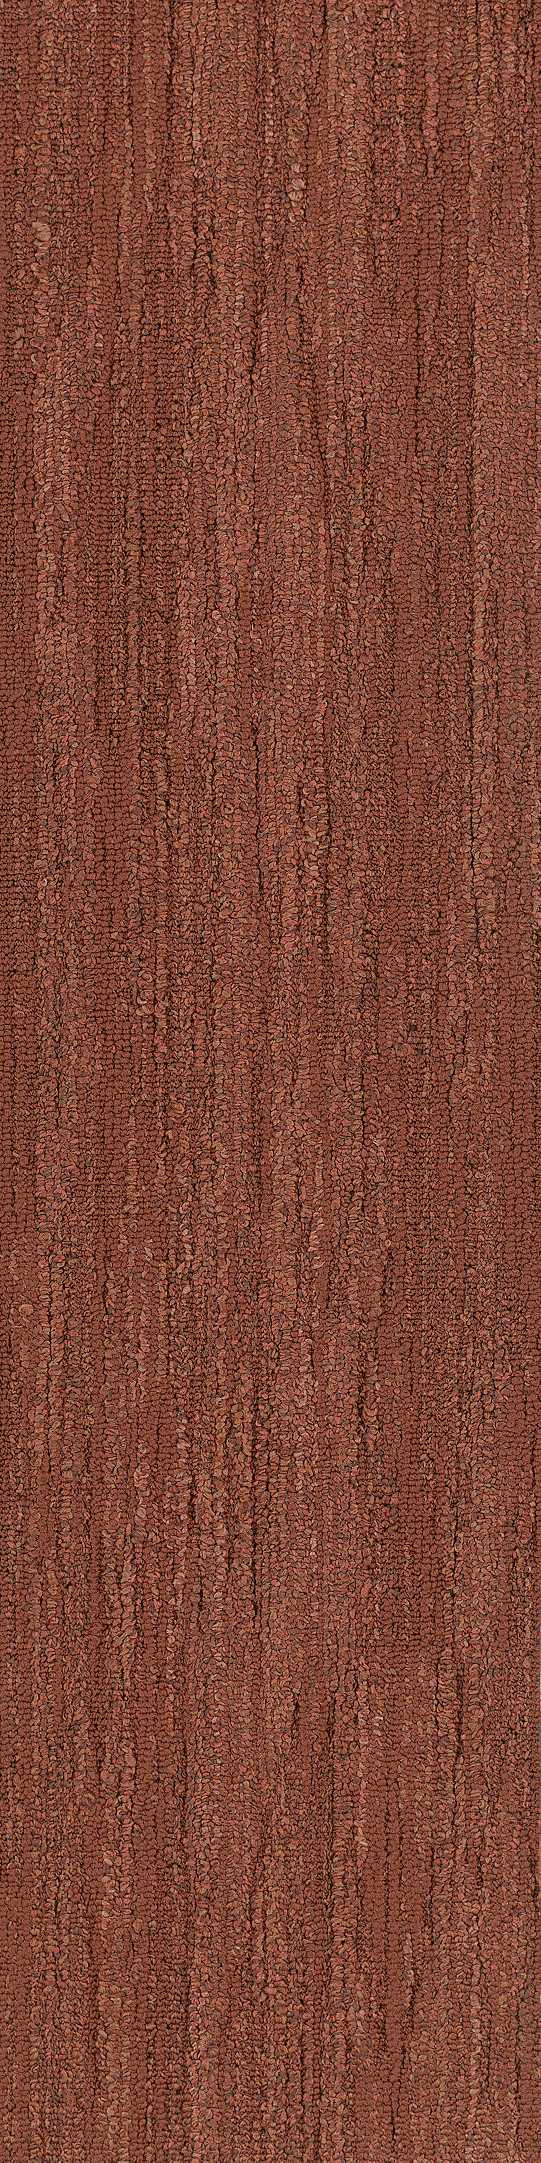 Shaw Resurface Carpet Tile Brick